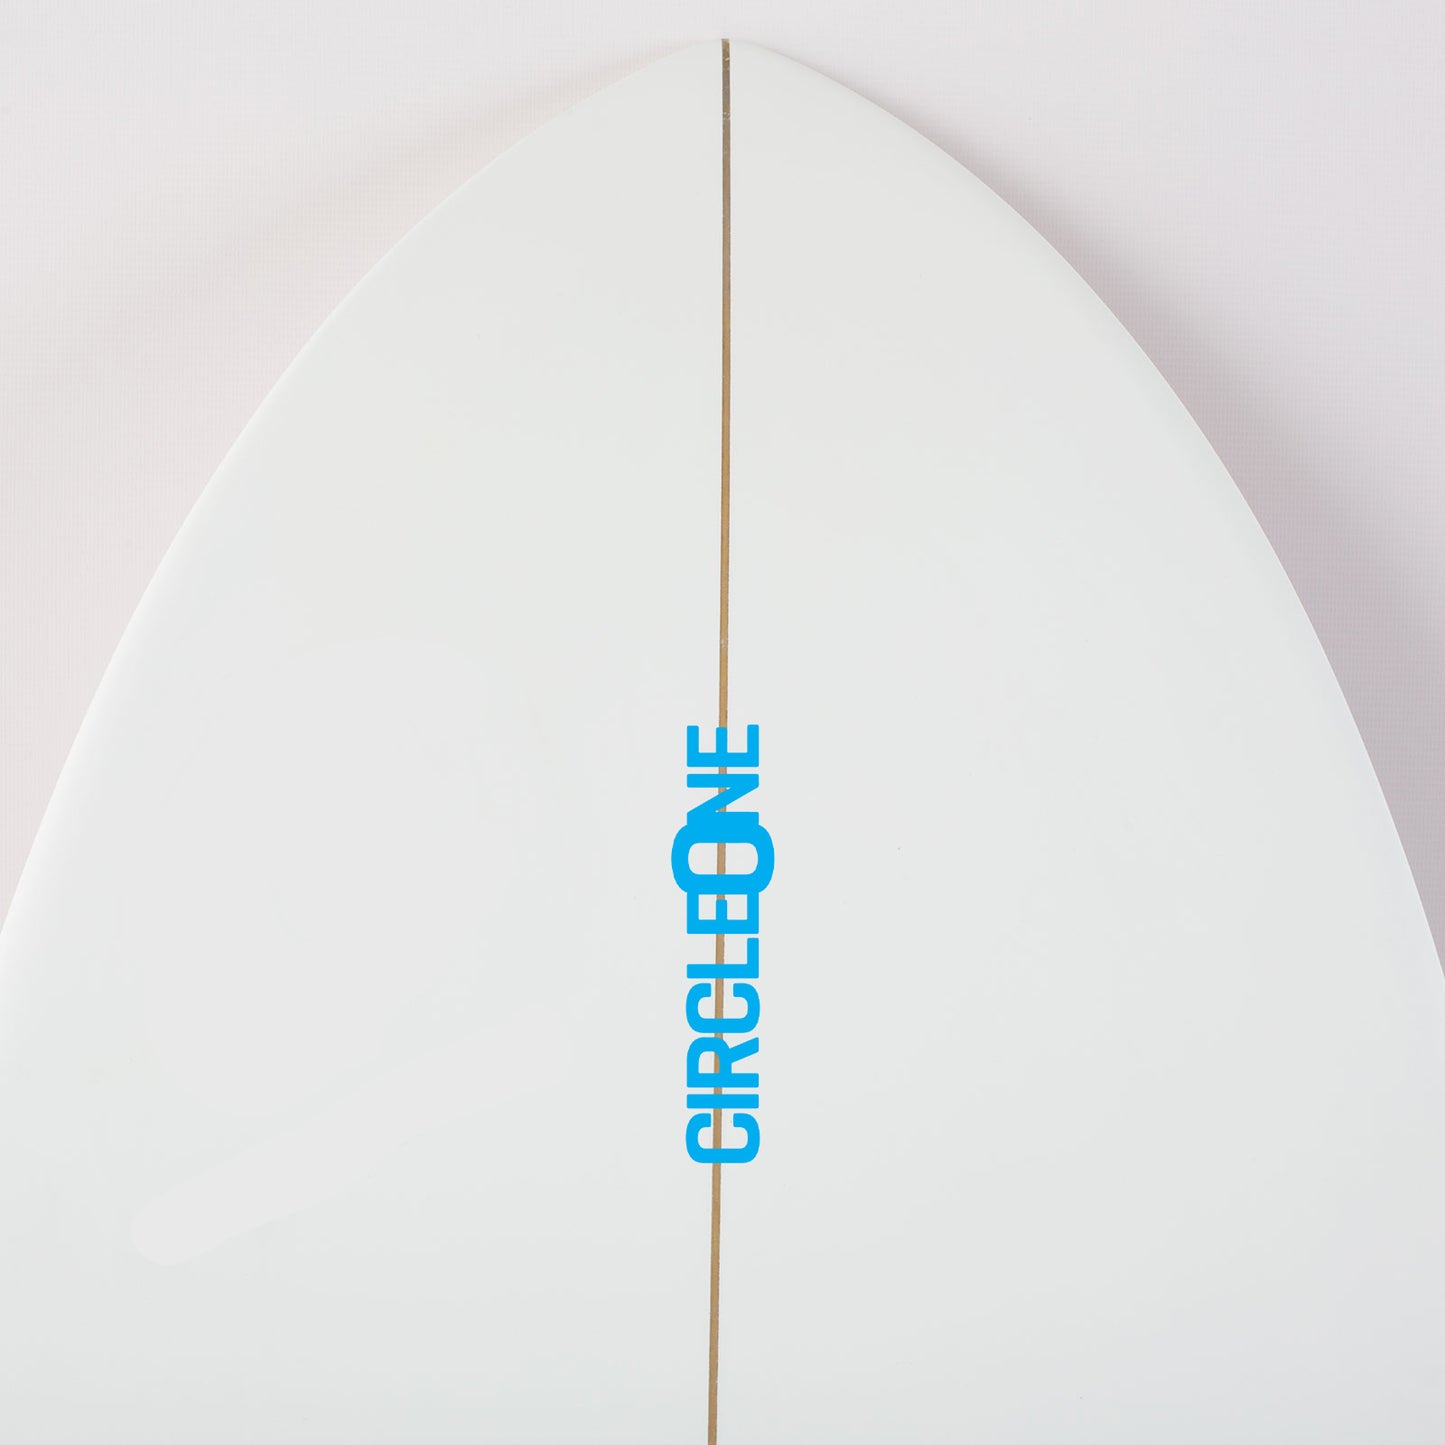 8ft Razor Mini Mal Surfboard – Matt Finish